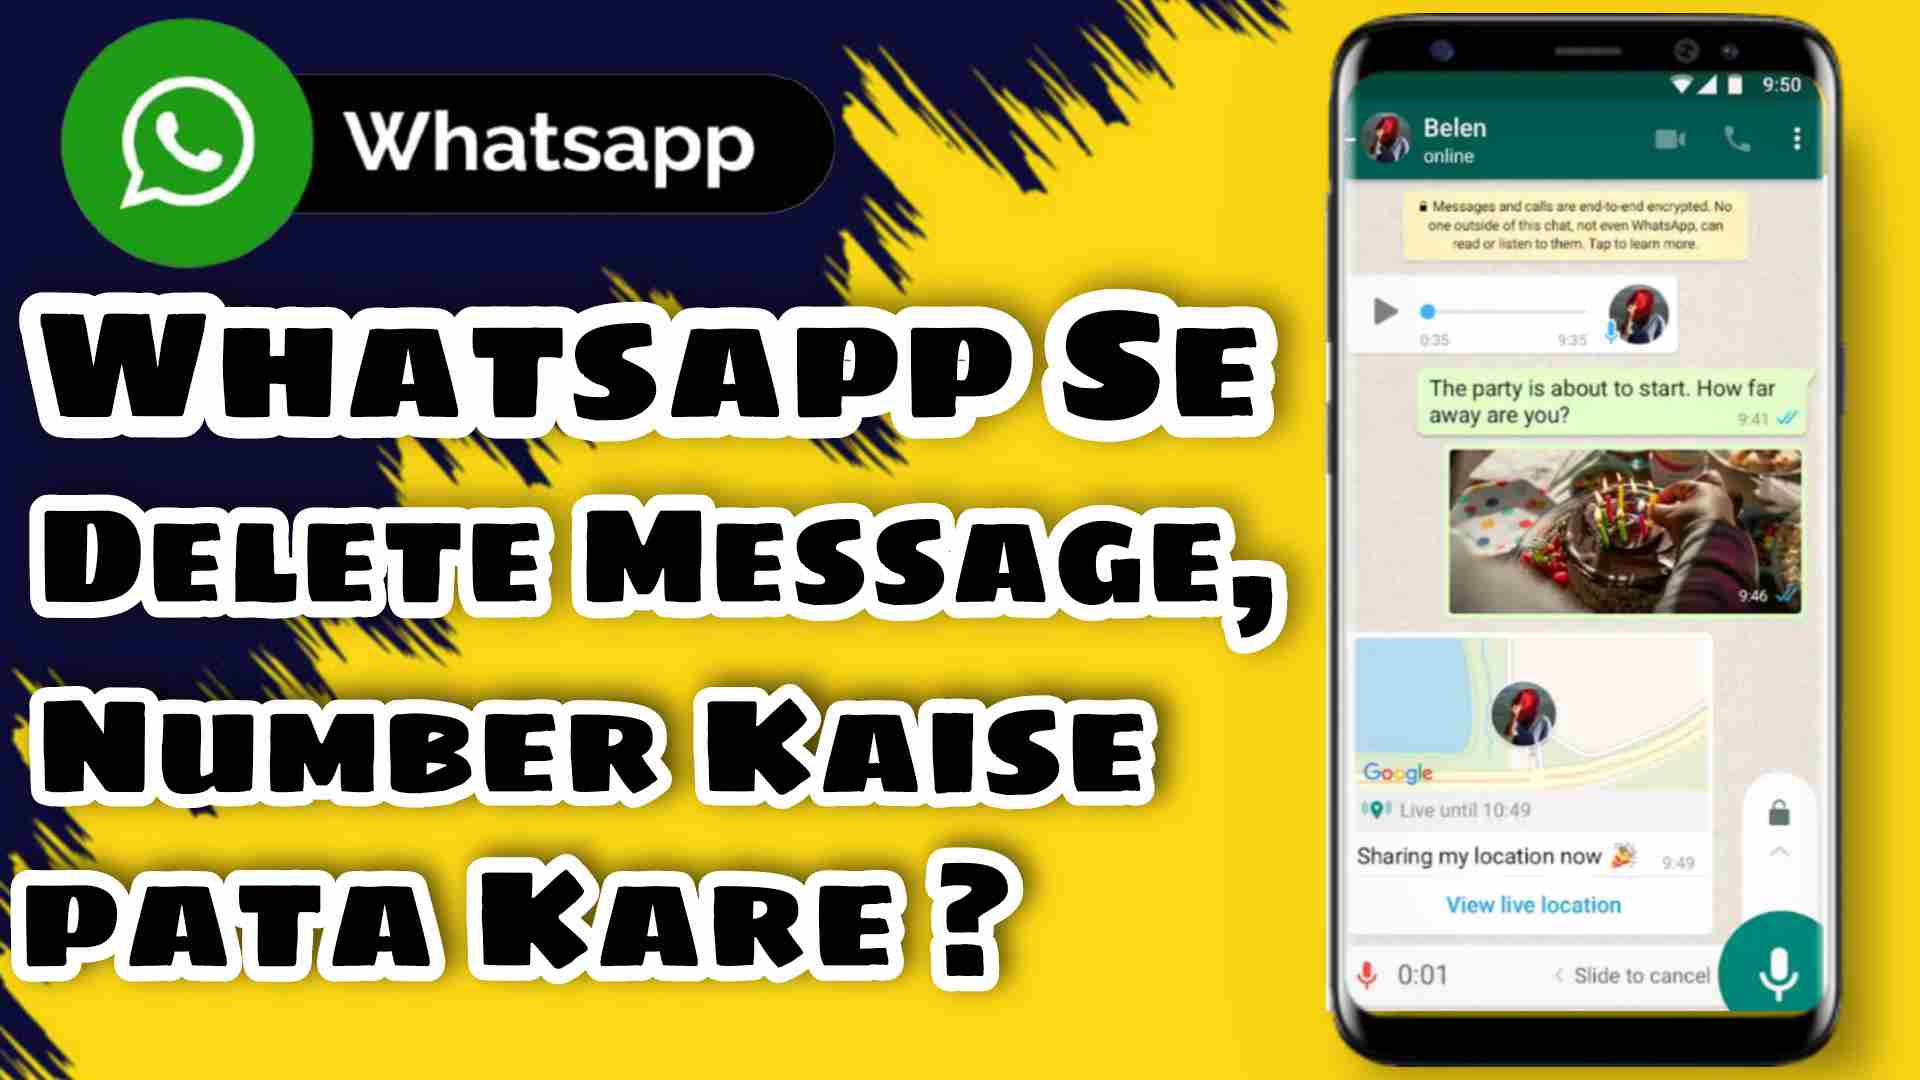 Whatsapp se delete message number kaise wapas laye